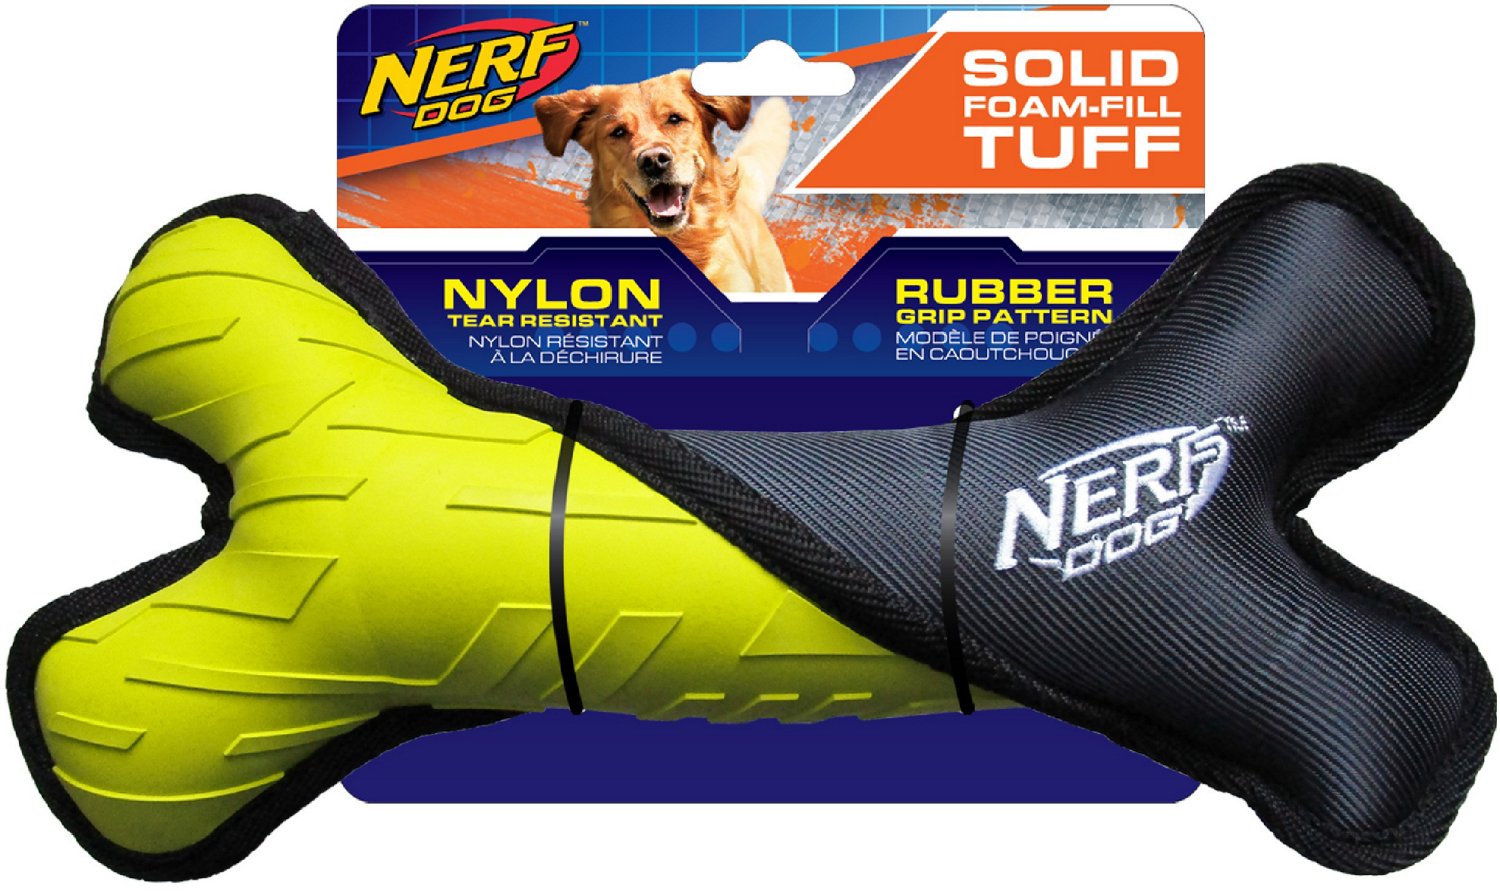 Nerf Dog Solid TUFF Sports Balls - Nerf Dog Toys